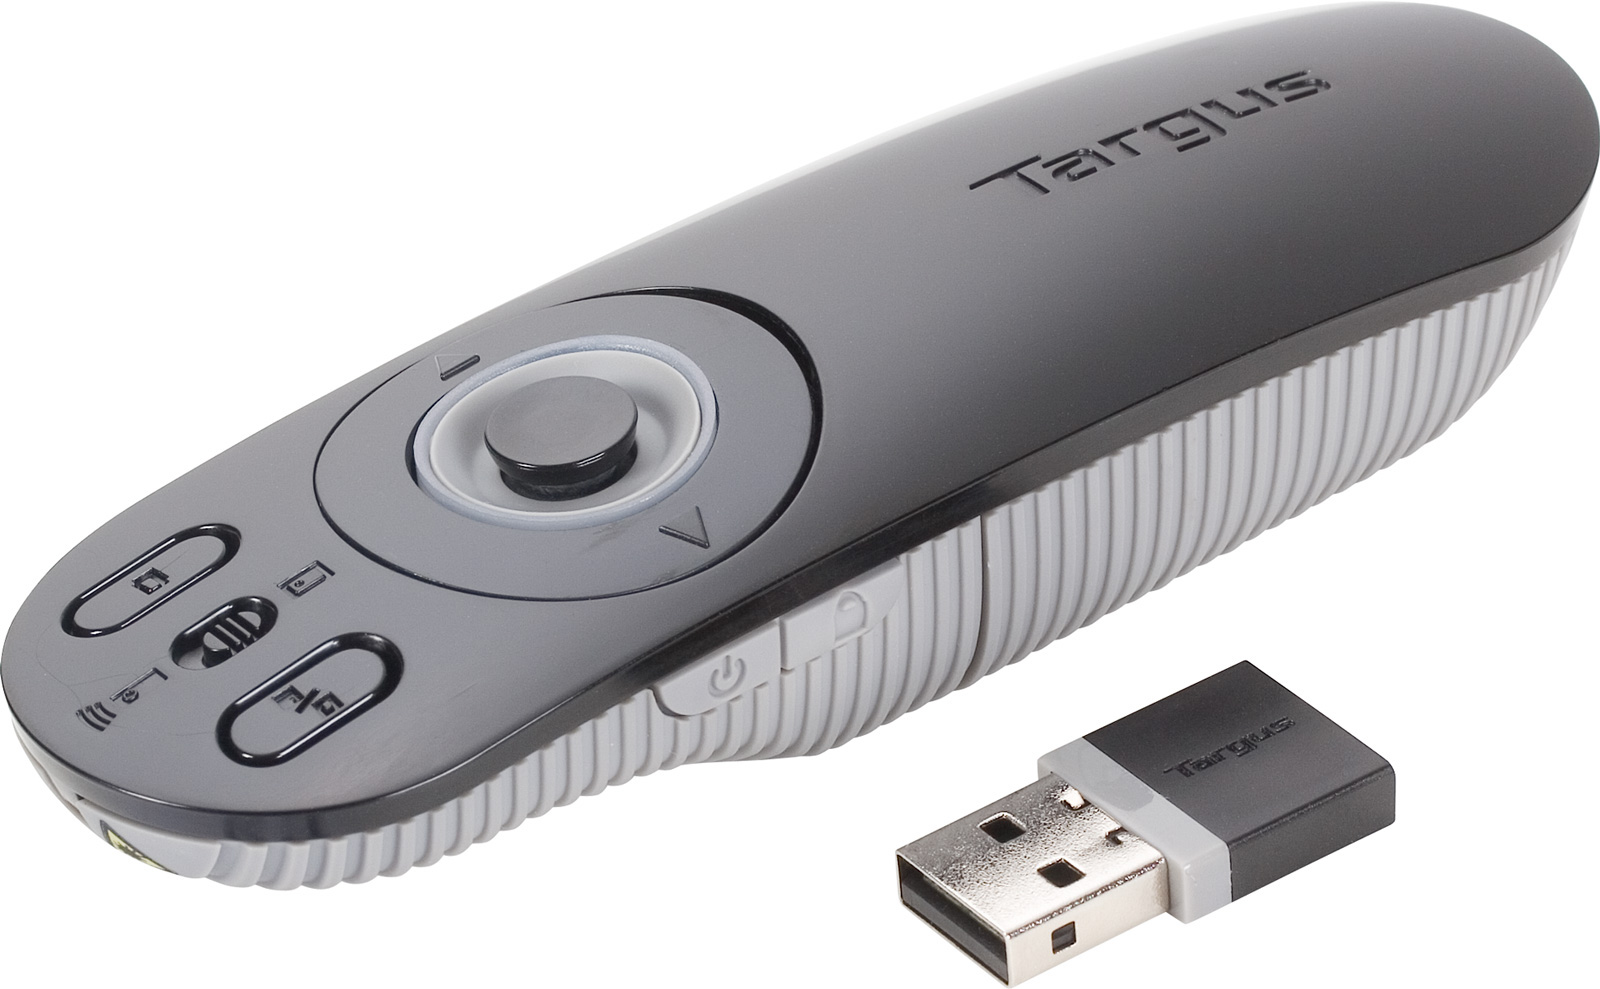 Targus Wireless USB Multimedia Presentation Remote 